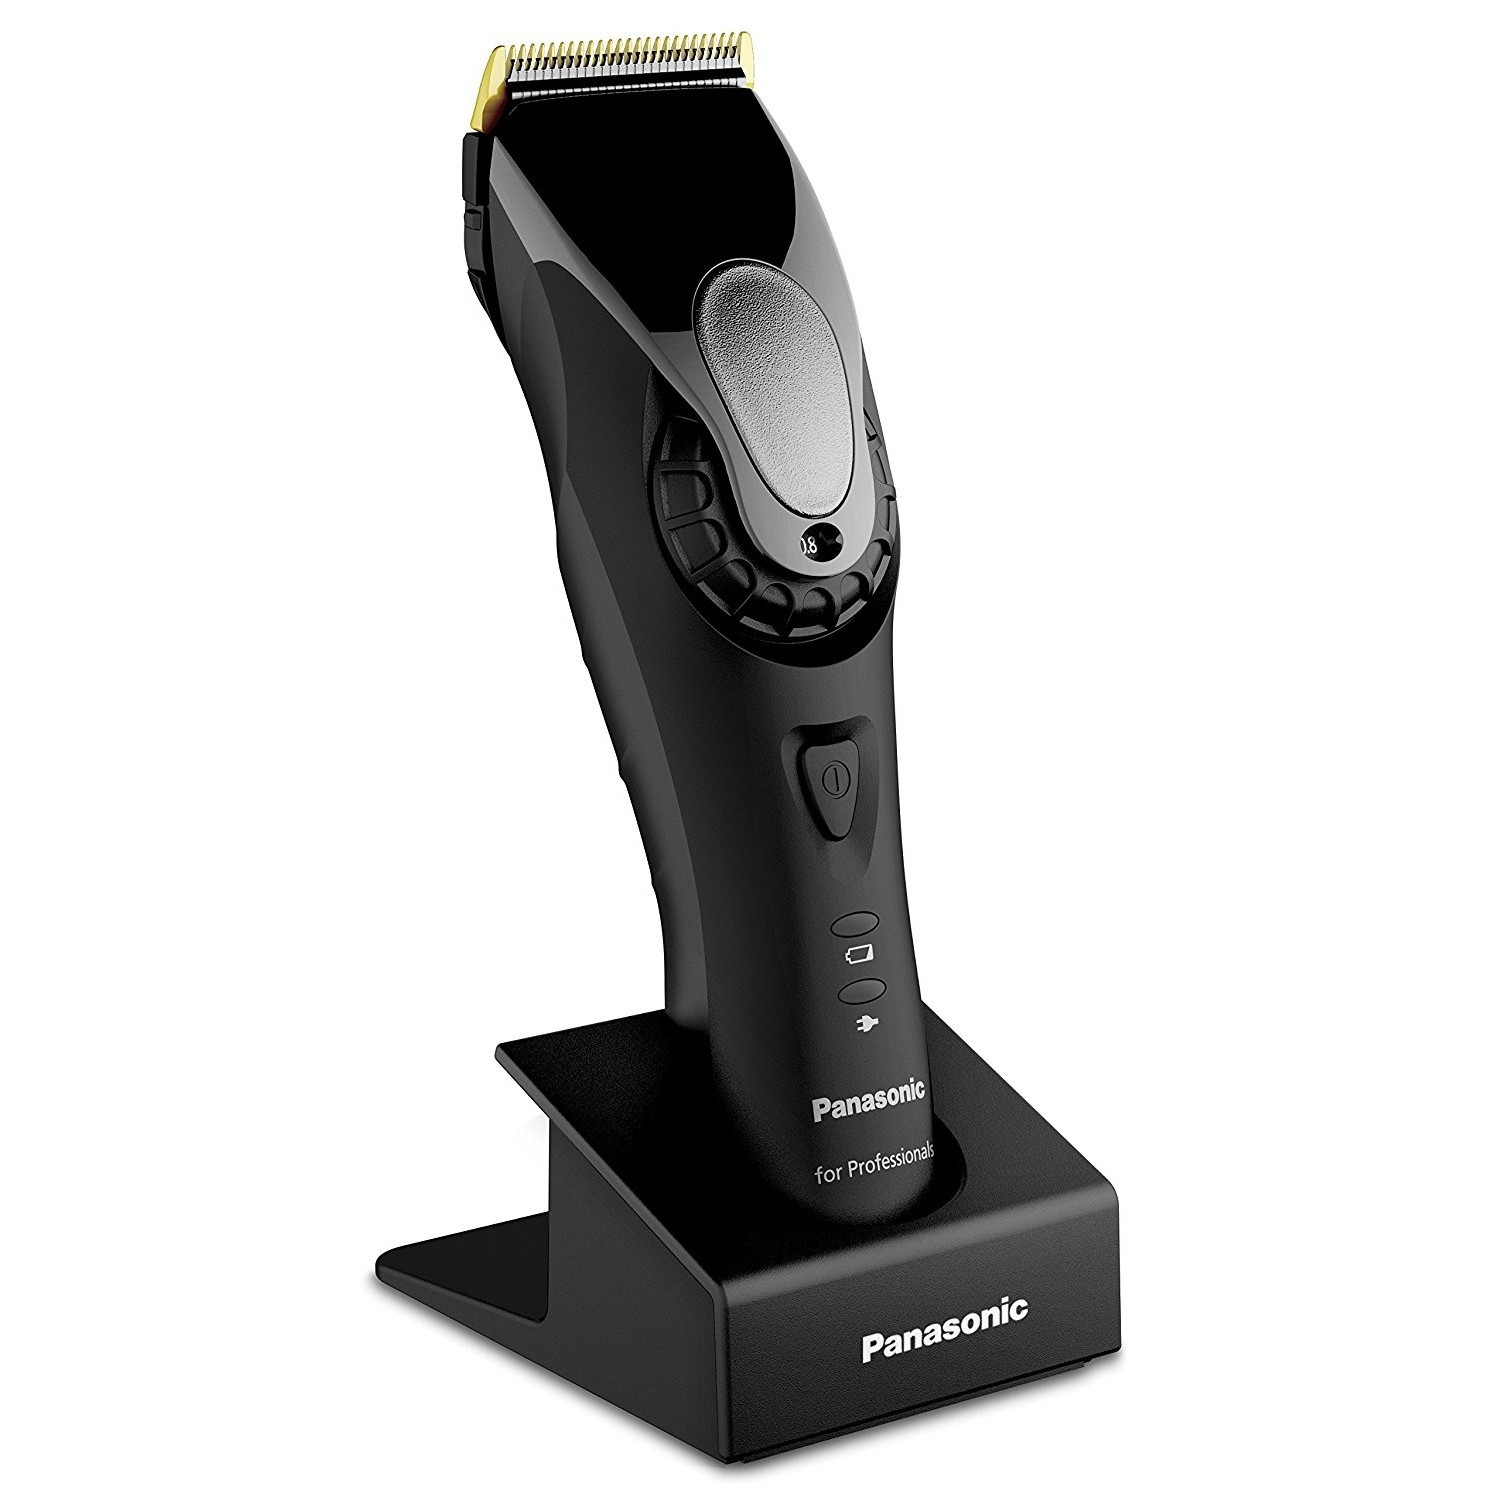 Panasonic Professional Hair Trimmer Black ER-GP80 - 松下 | Buyhome.hk